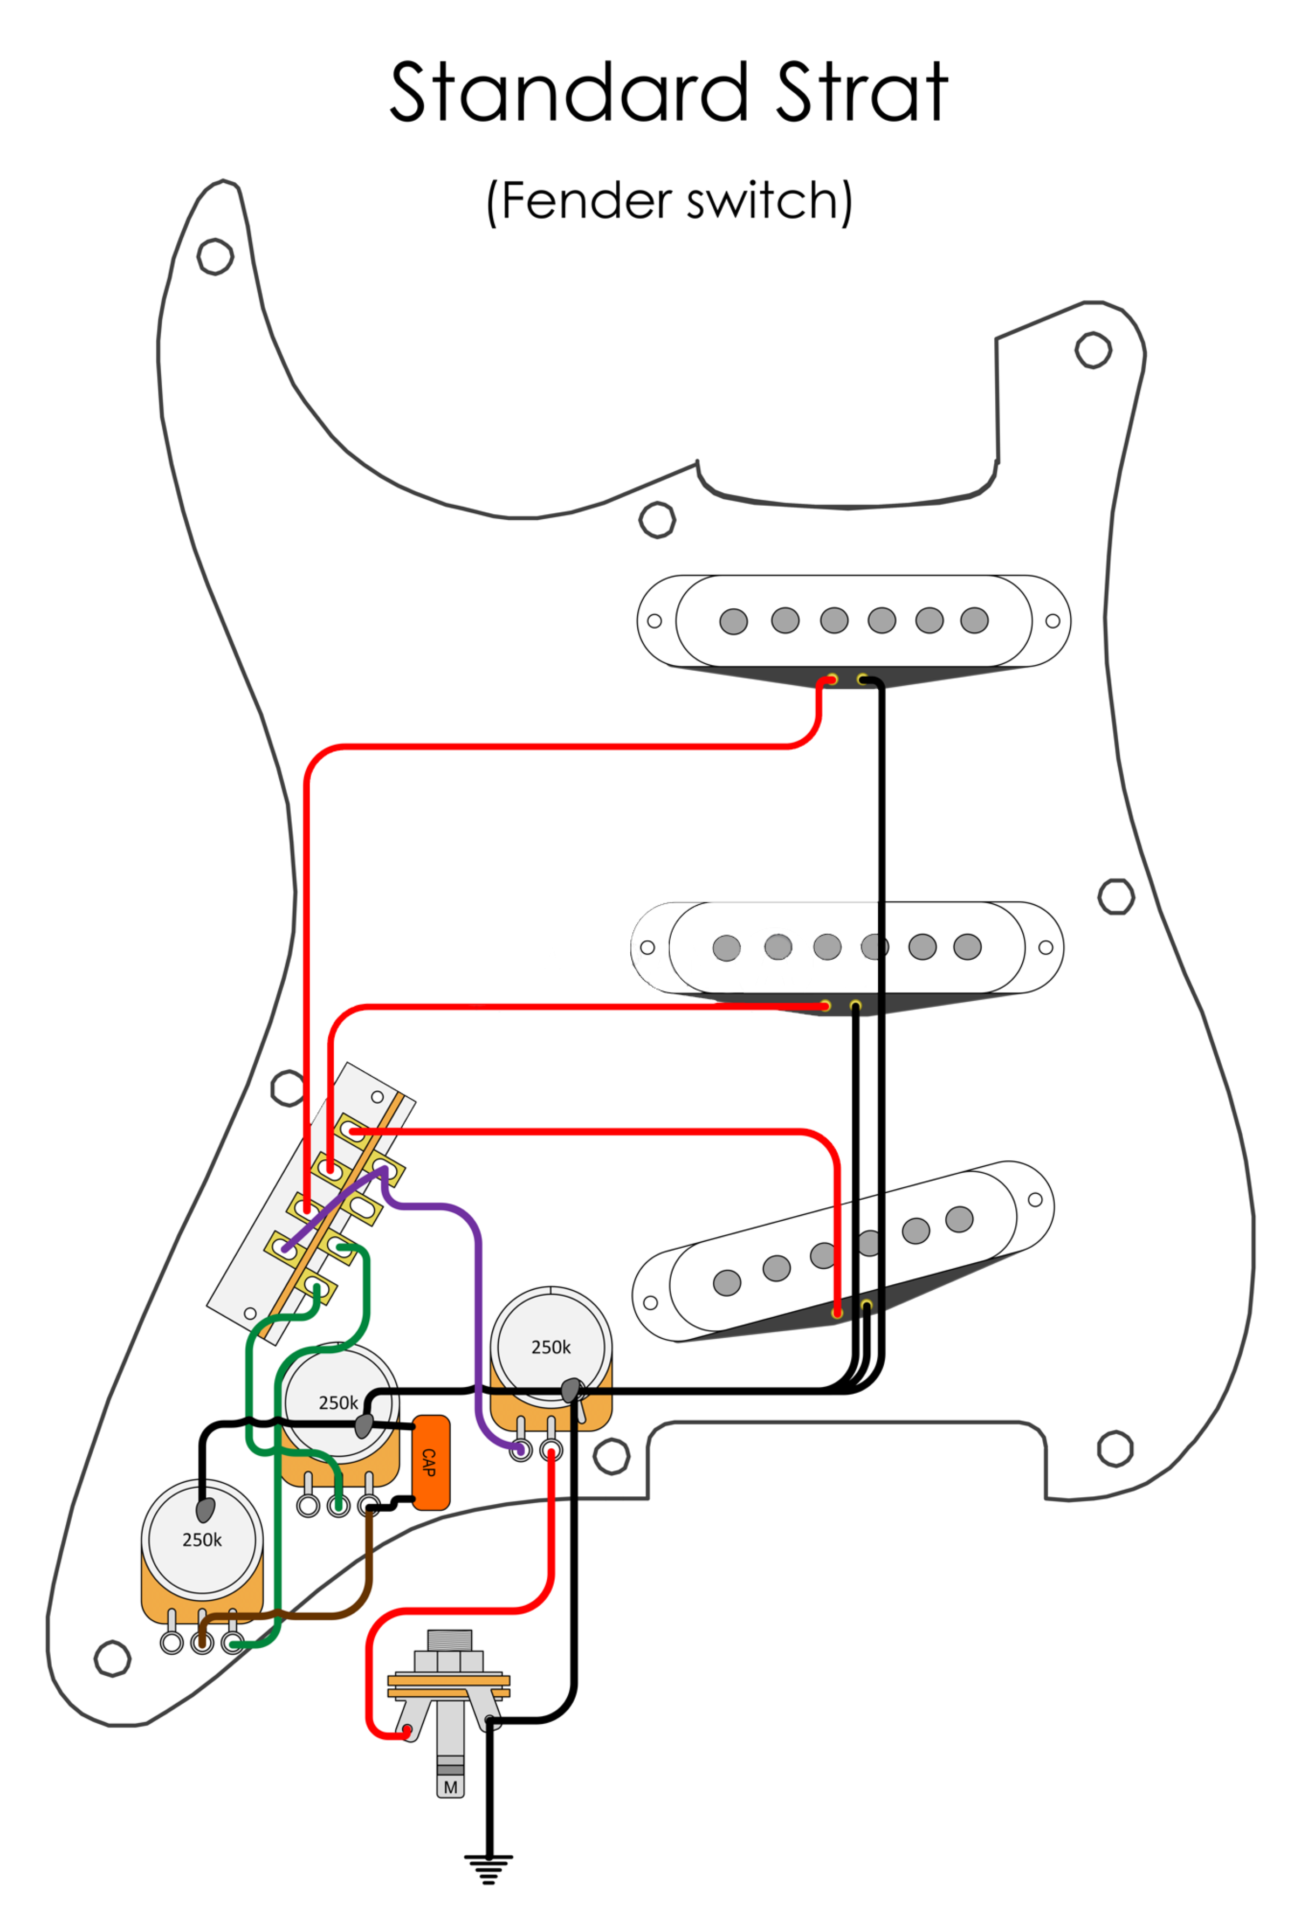 Guitar Wiring Diagram Online Calculator from blackwoodguitarworks.com